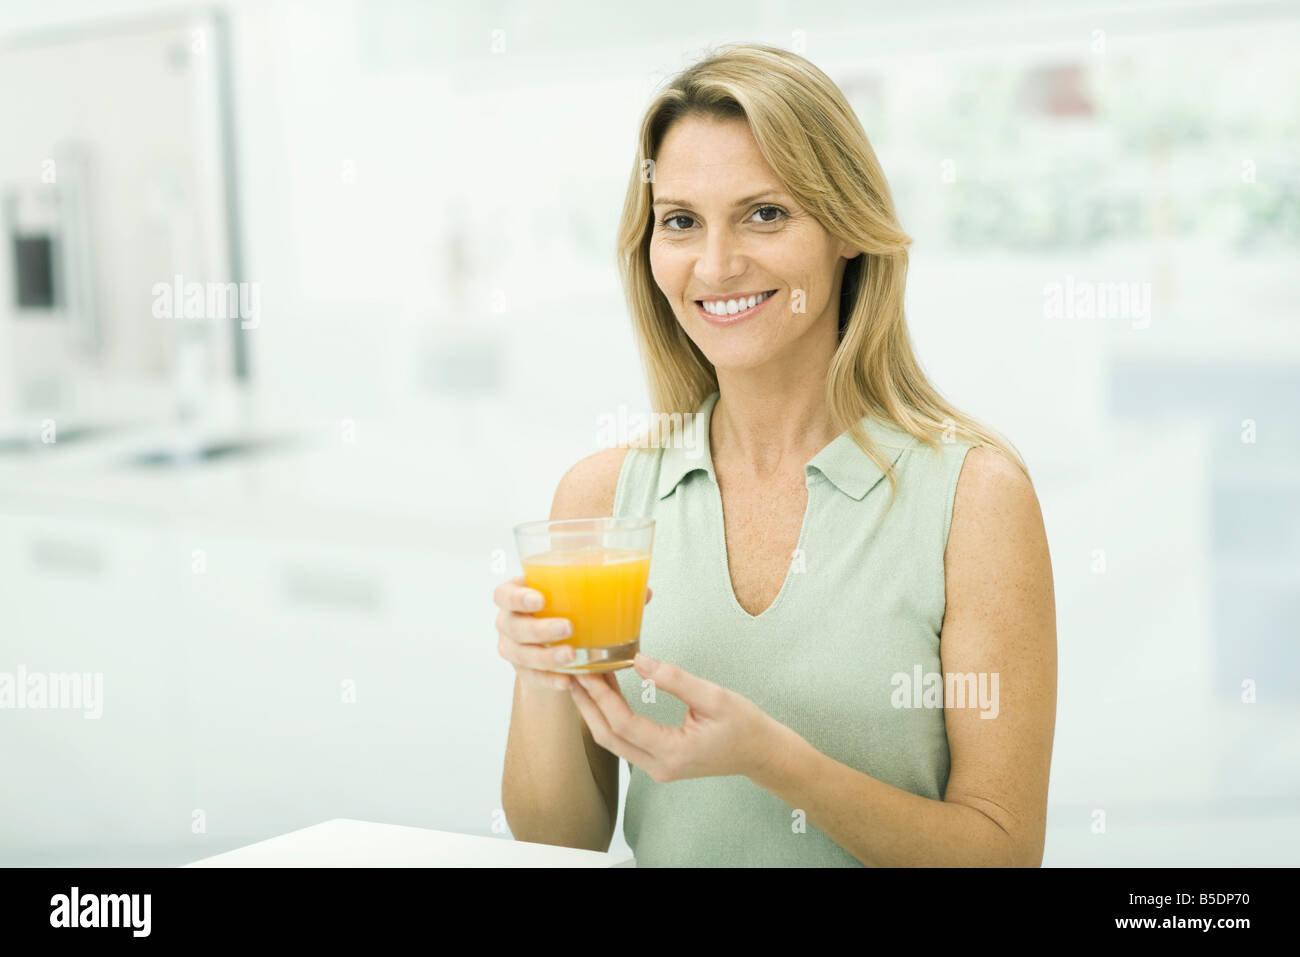 Woman holding up glass of orange juice, smiling at camera, portrait Stock Photo